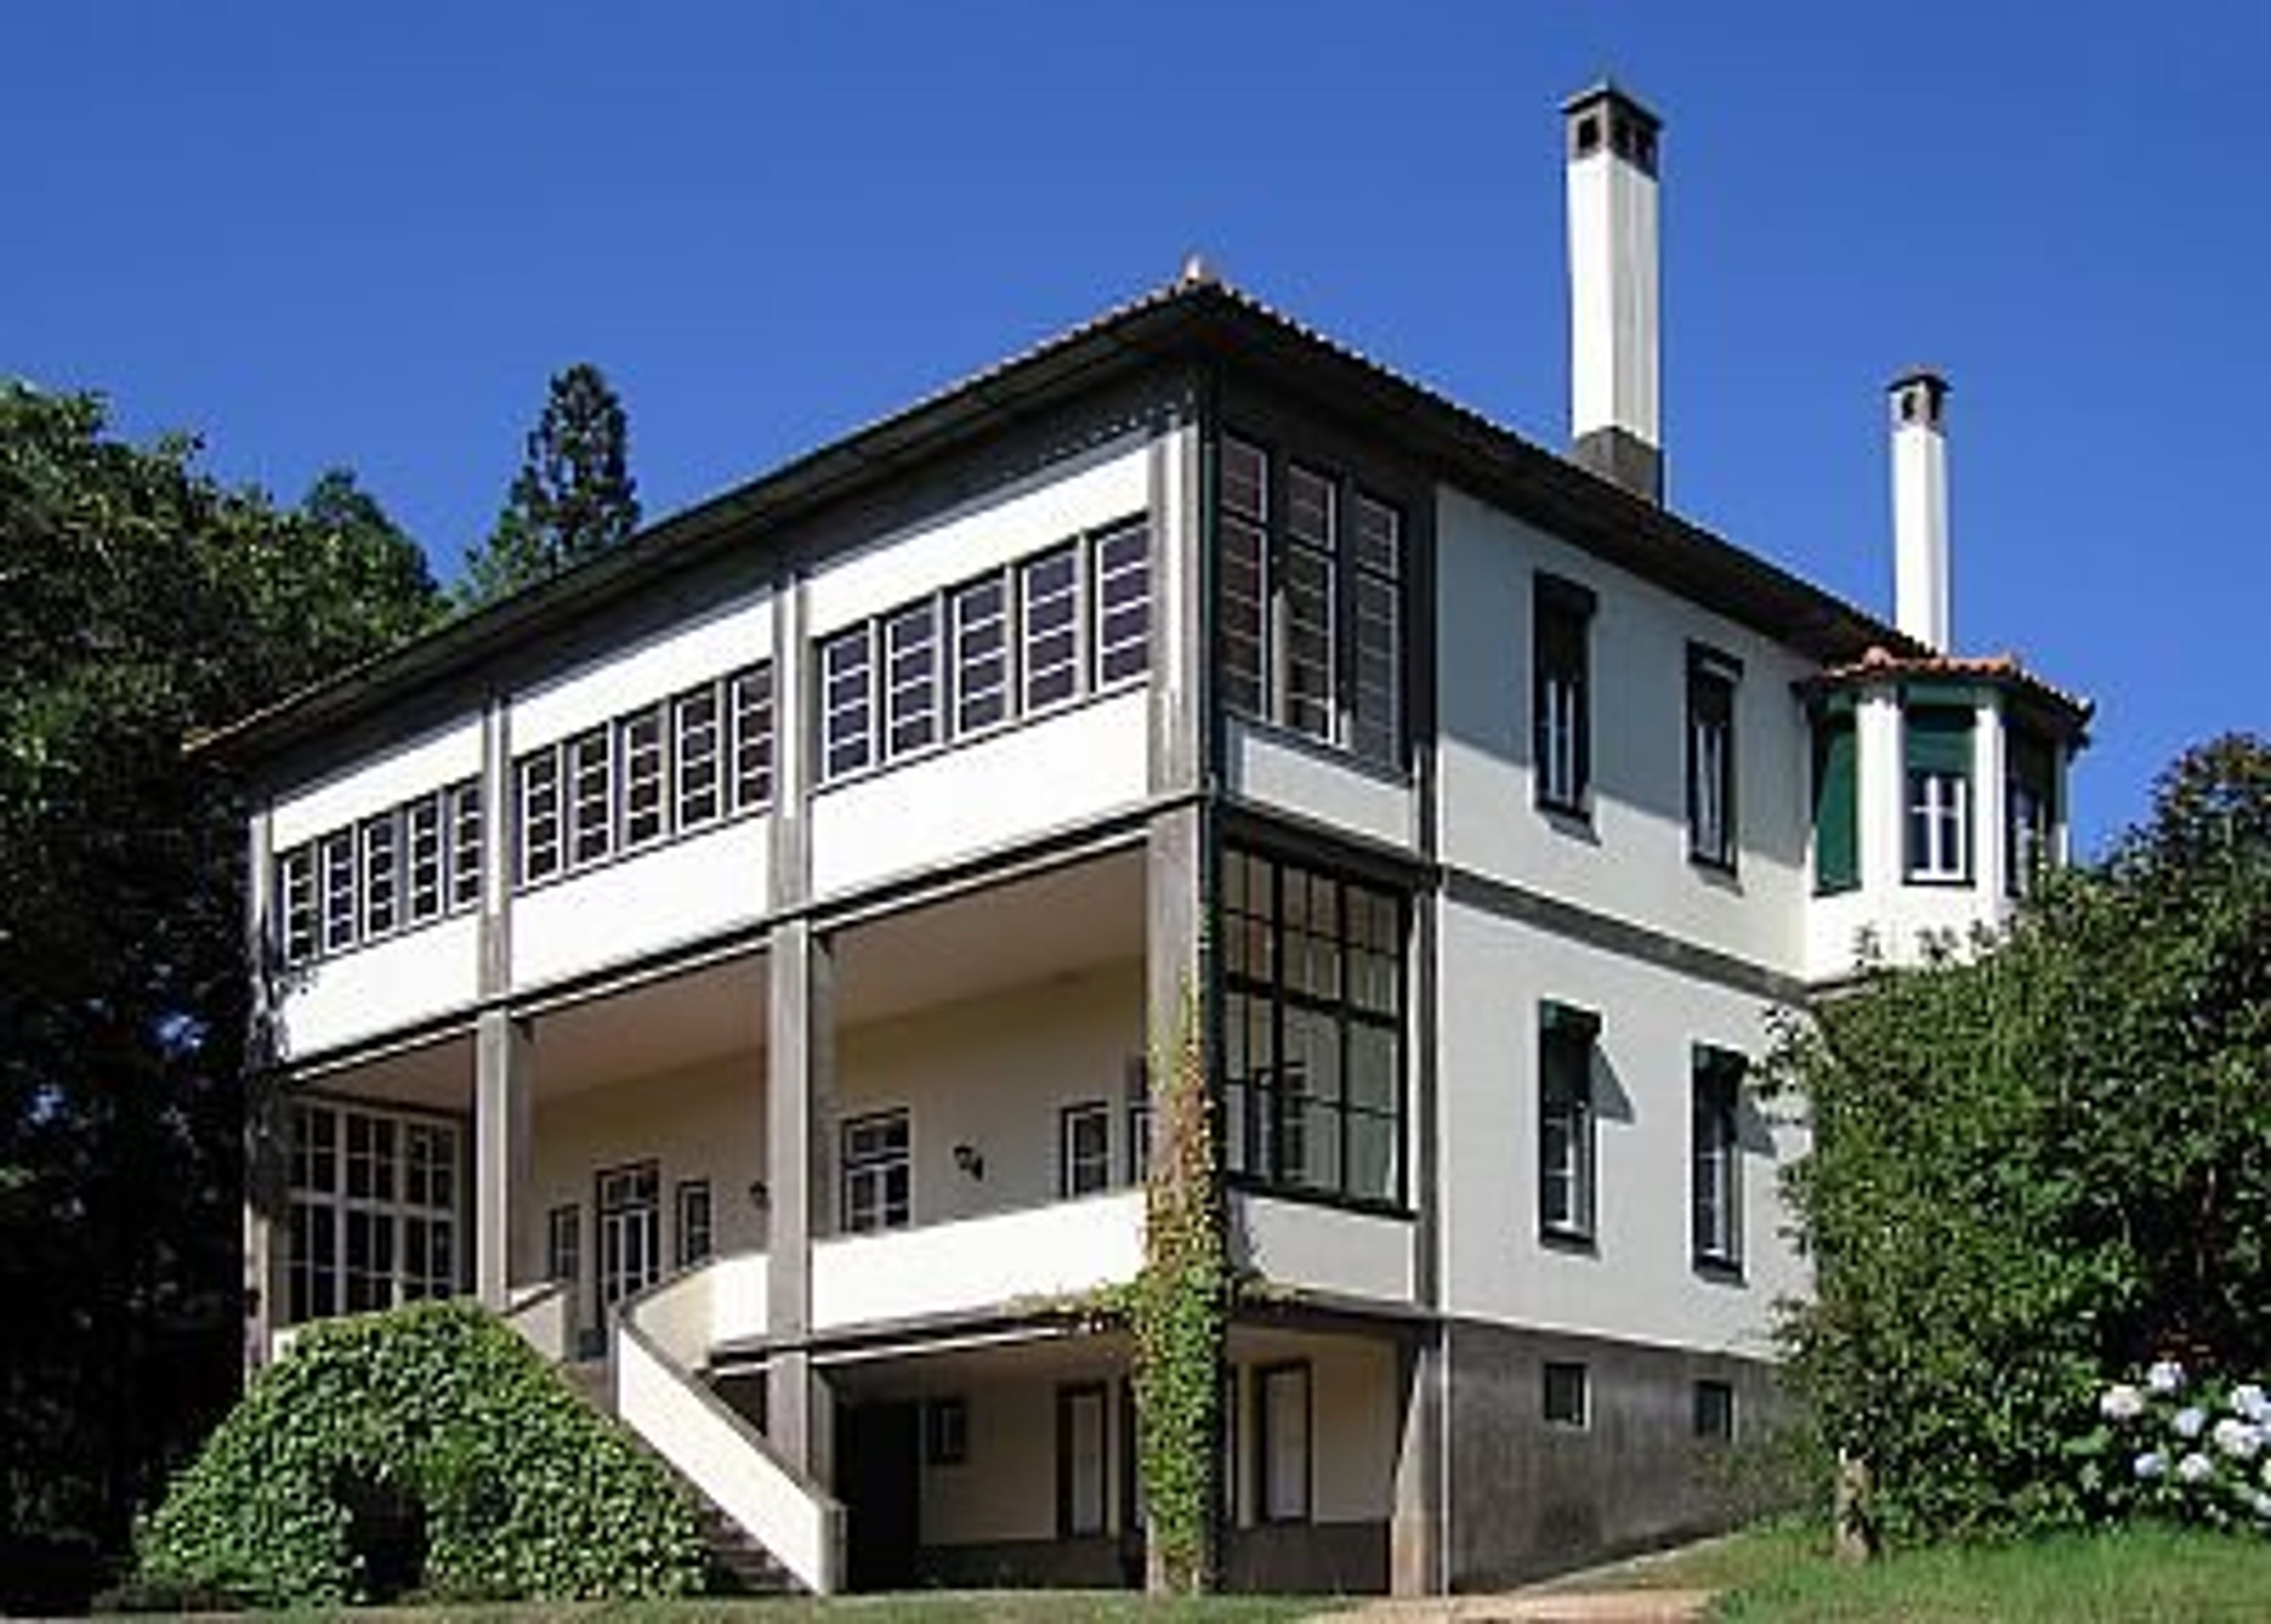 A spacious country house on Madeira Island